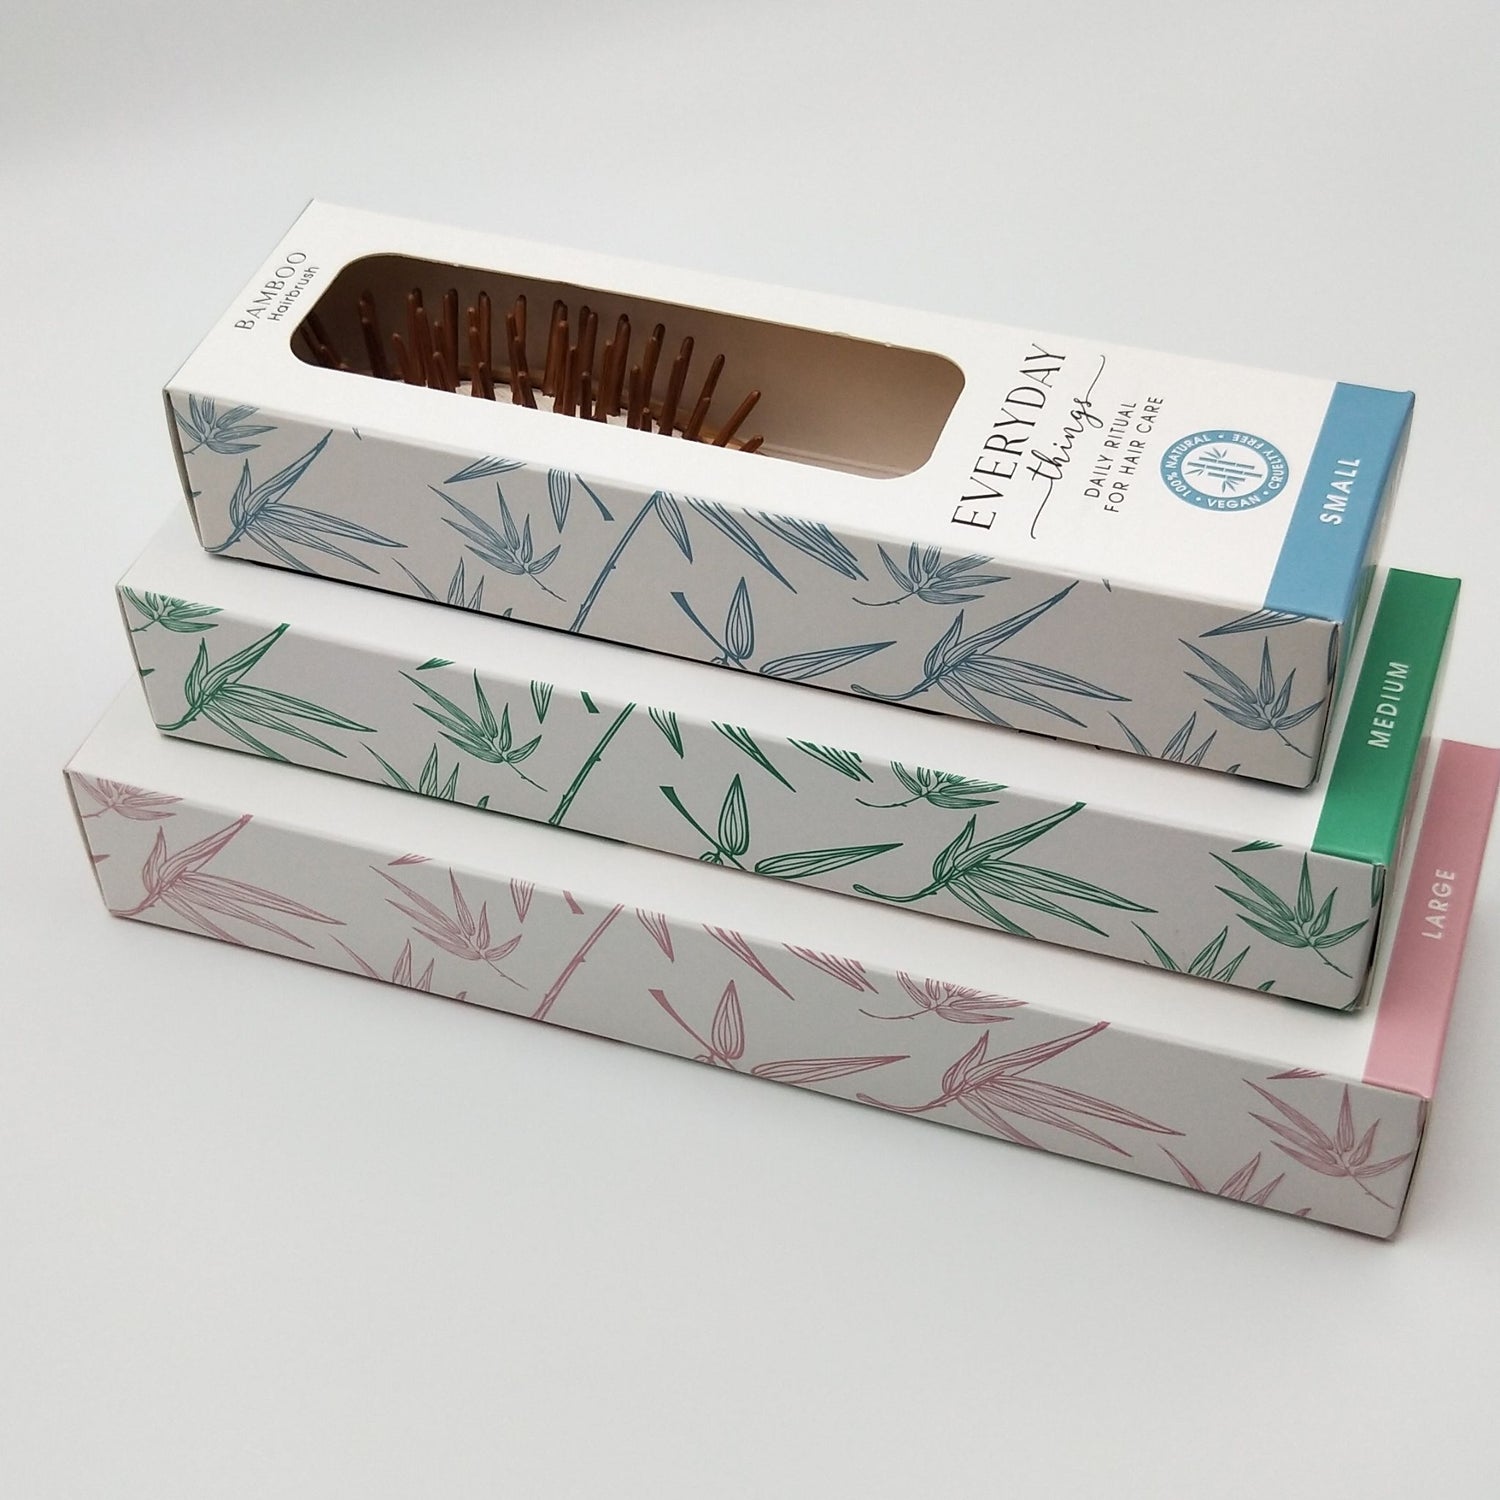 Bamboo hairbrush in beautiful packaging